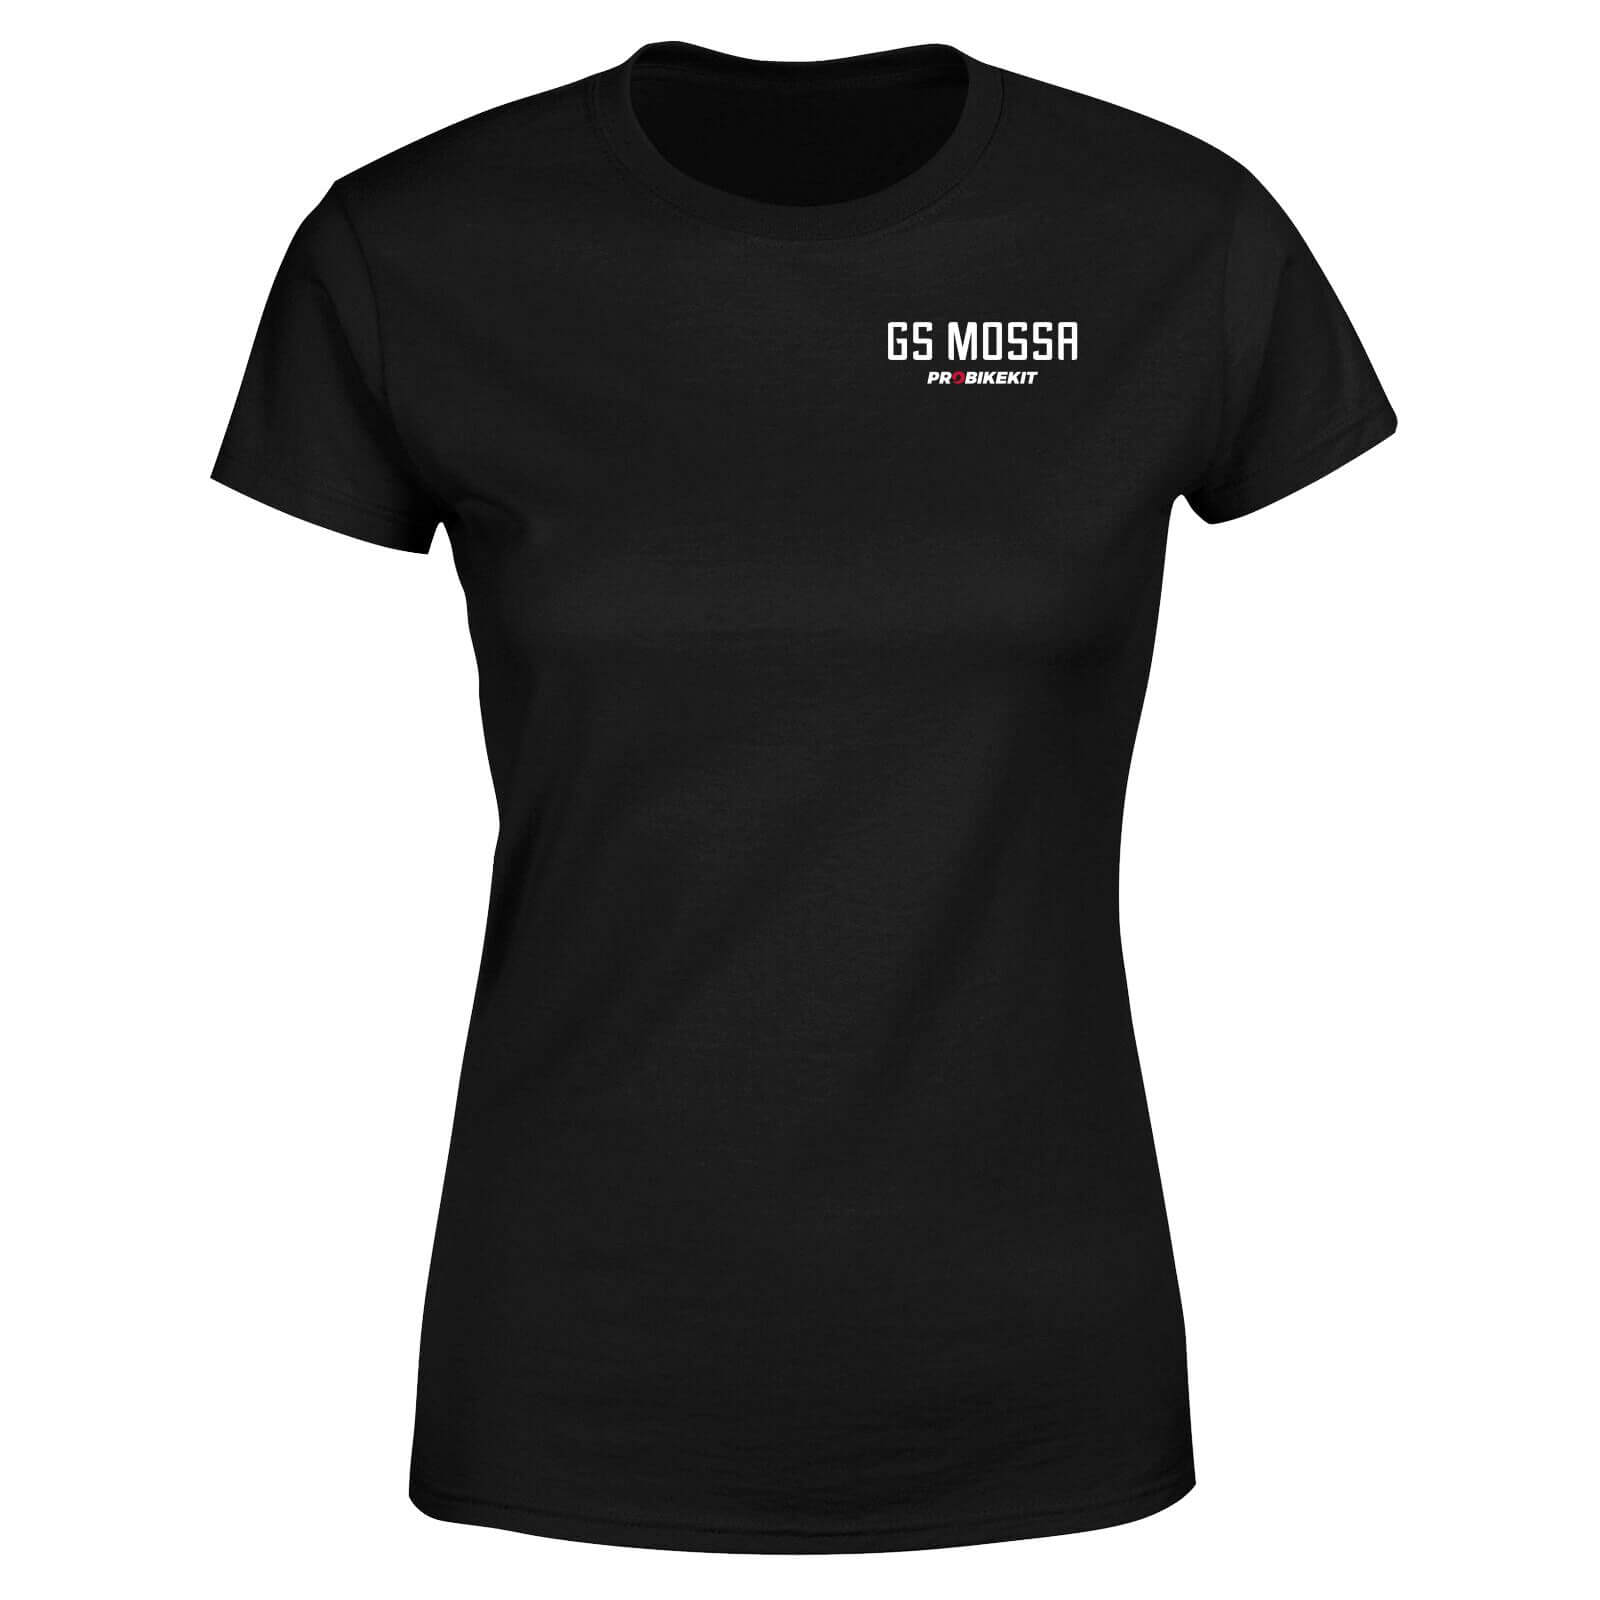 PBK GS Mossa Pocket Print Aqua Wave Women's T-Shirt - Black - L - Black